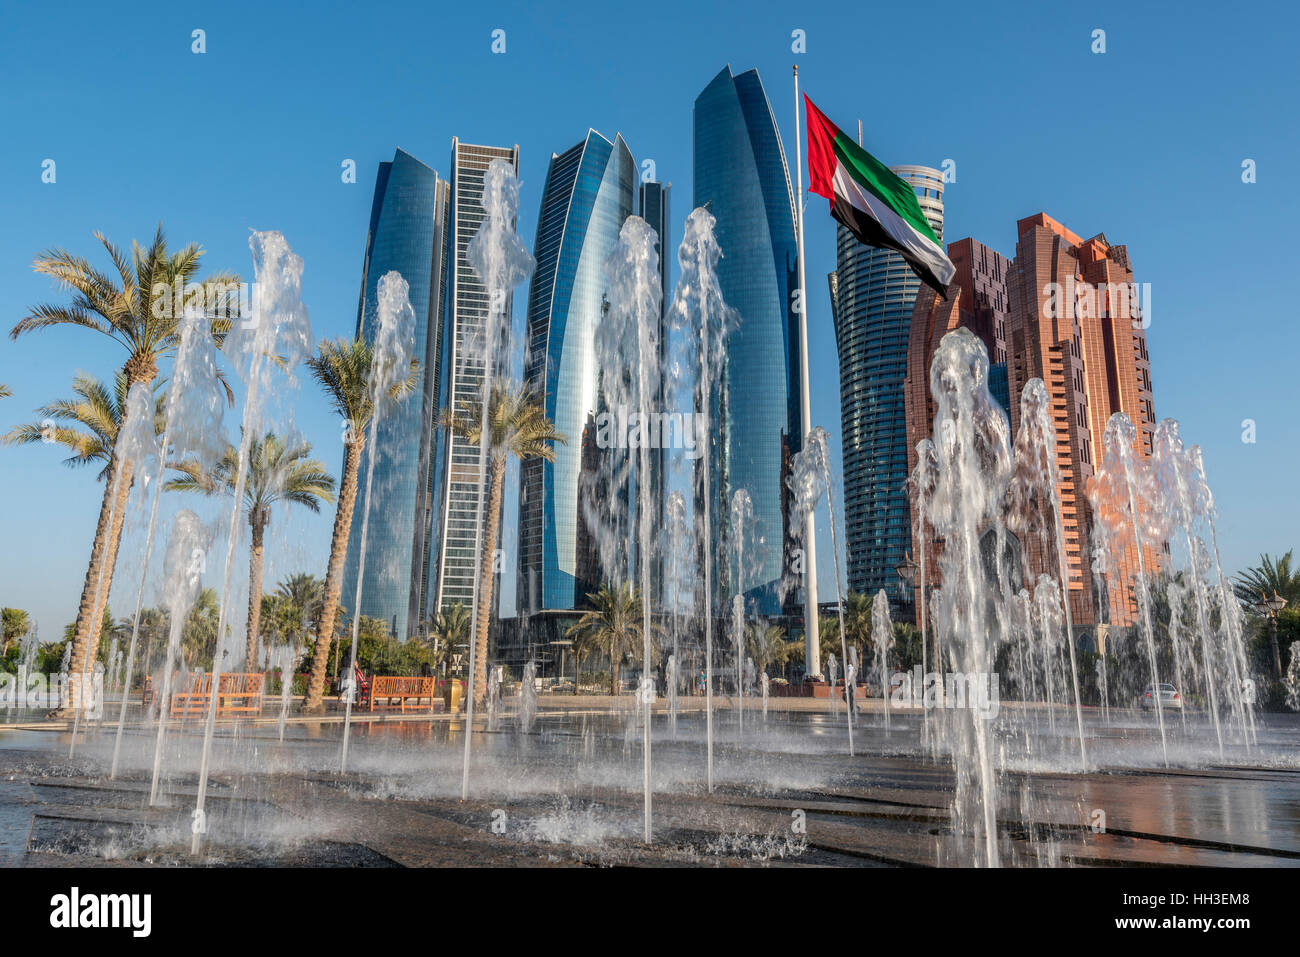 Etihad Towers Modern Buildings On The Corniche In Abu Dhabi With